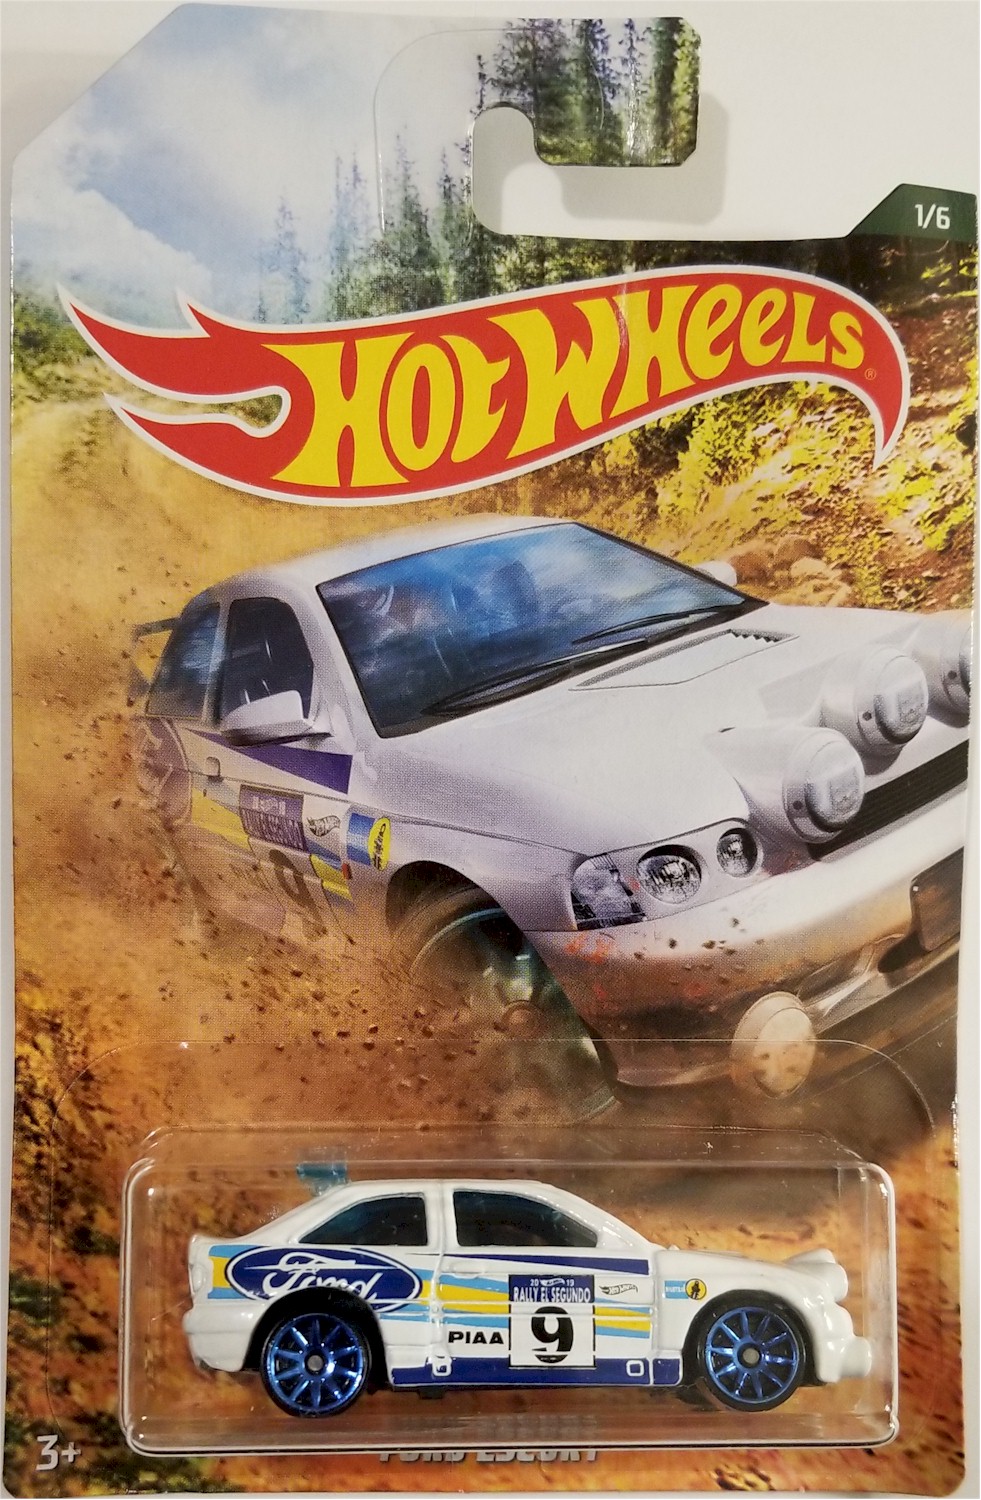 ford escort hot wheels 2019